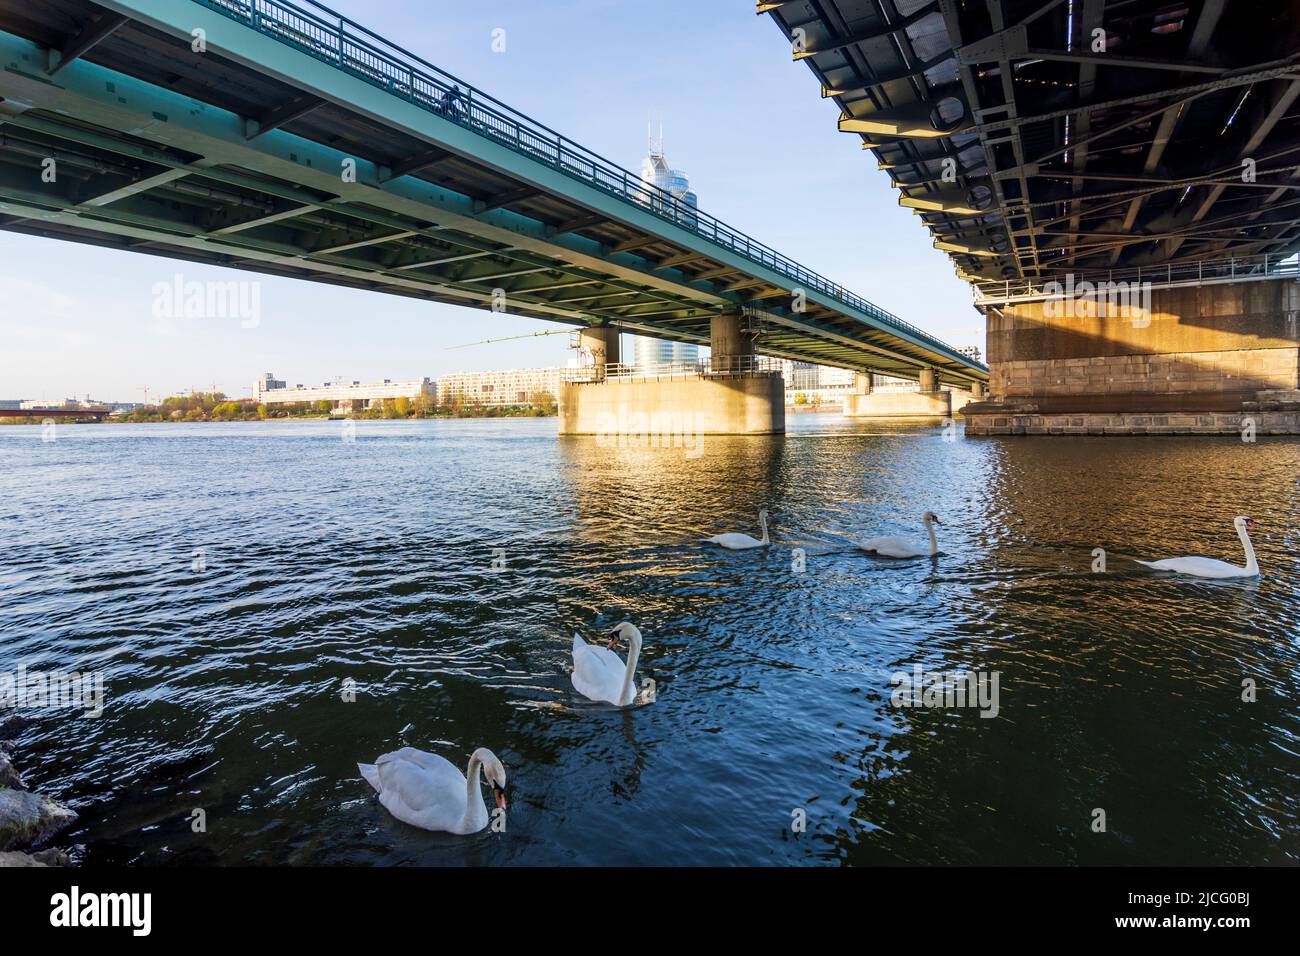 Vienna, fiume Donau (Danubio), ponti Nordbahnbrücke e Georg-Danzer-Steg, cigni muti (Cygnus olor) nel 20. Distretto Brigittenau, Vienna, Austria Foto Stock